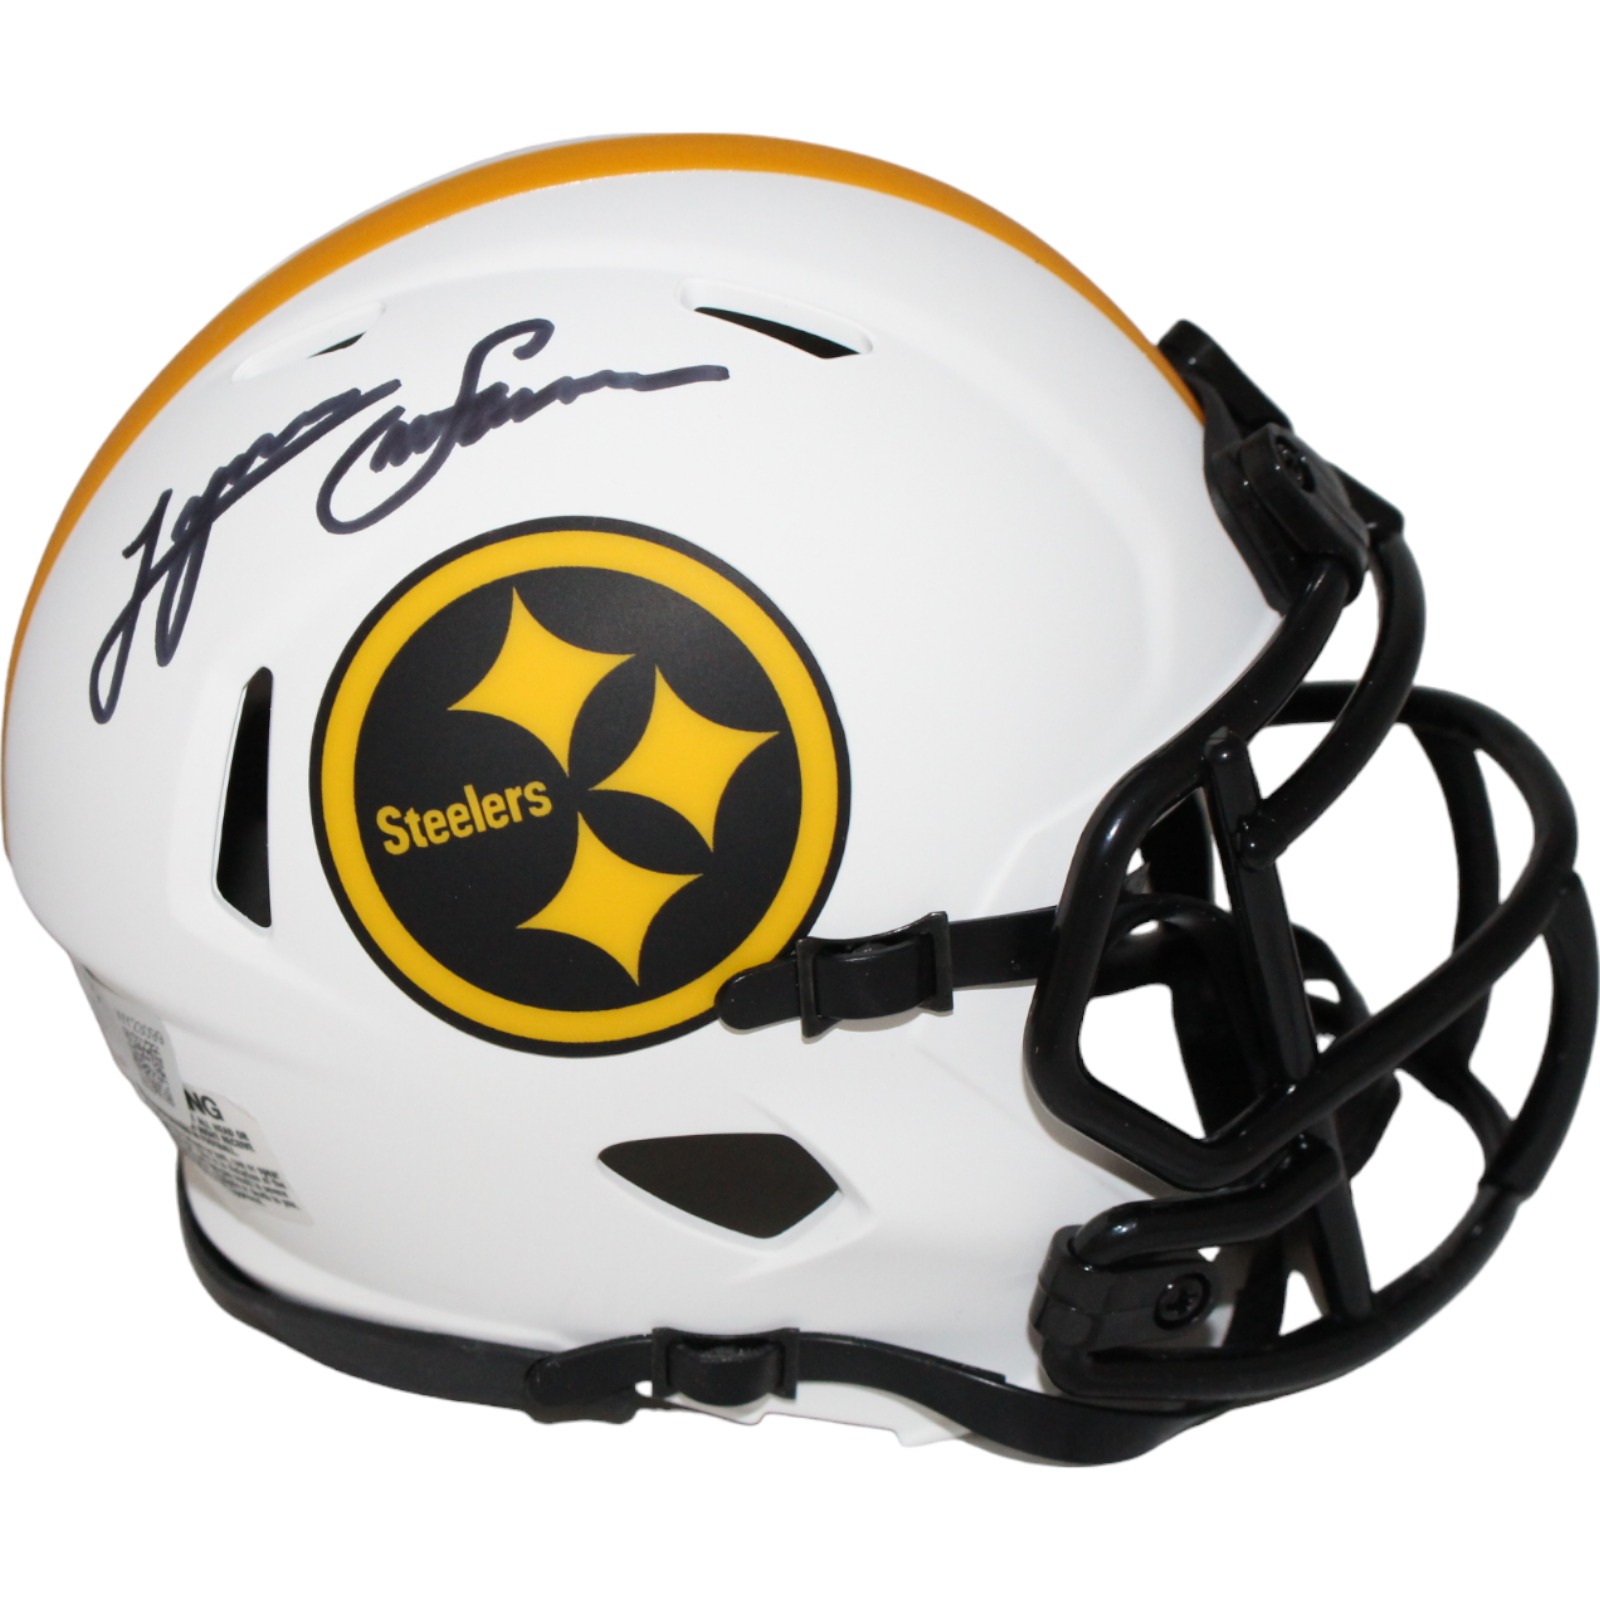 Lynn Swann Autographed Pittsburgh Steelers Lunar Mini Helmet Beckett